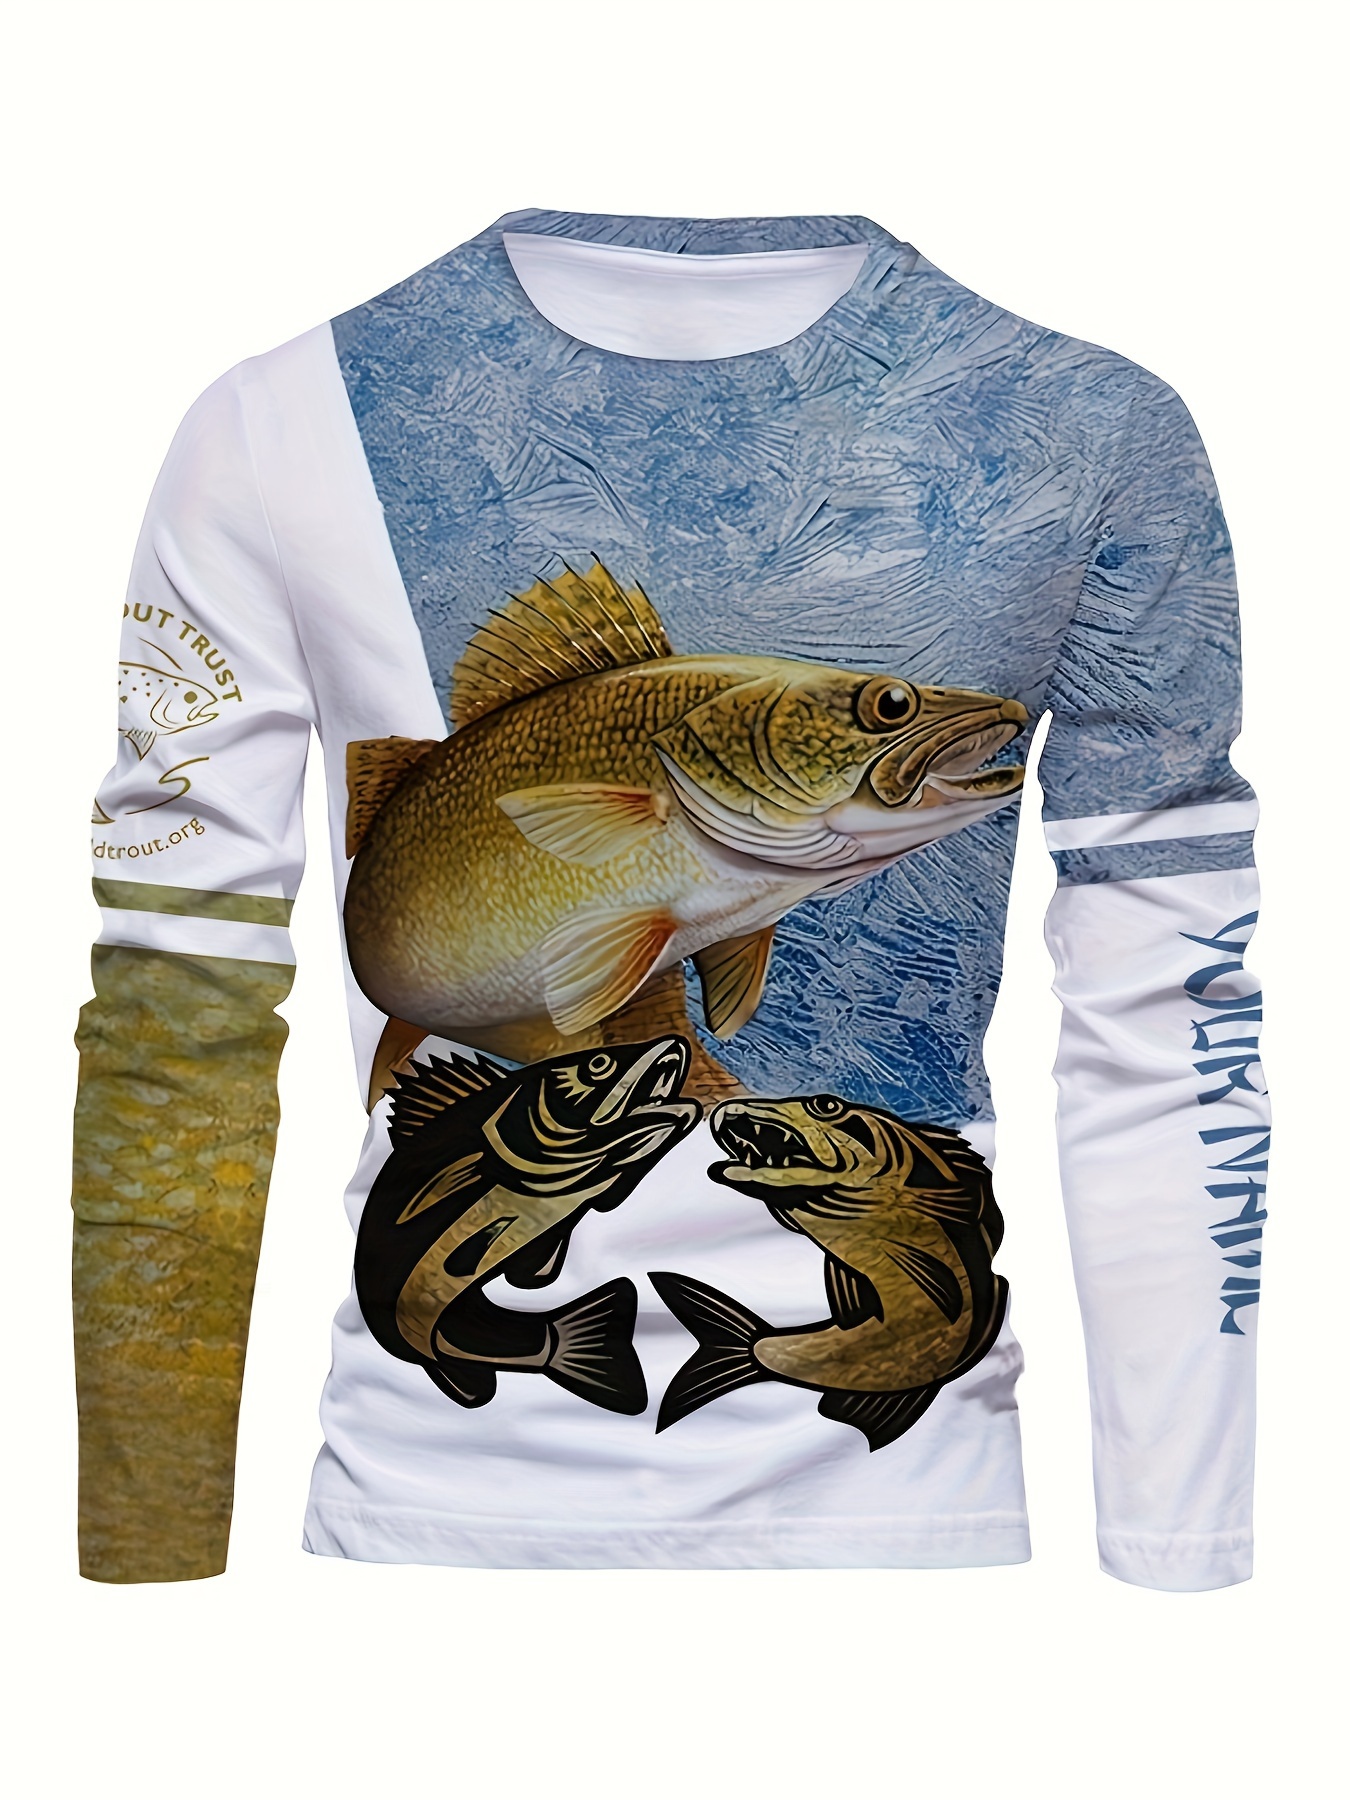 Fish Print Long Sleeve Fishing Shirts & Pants For Men, Novelty Pjs Tops  Pullovers Tops & Trousers Set, Men's Trendy Clothing